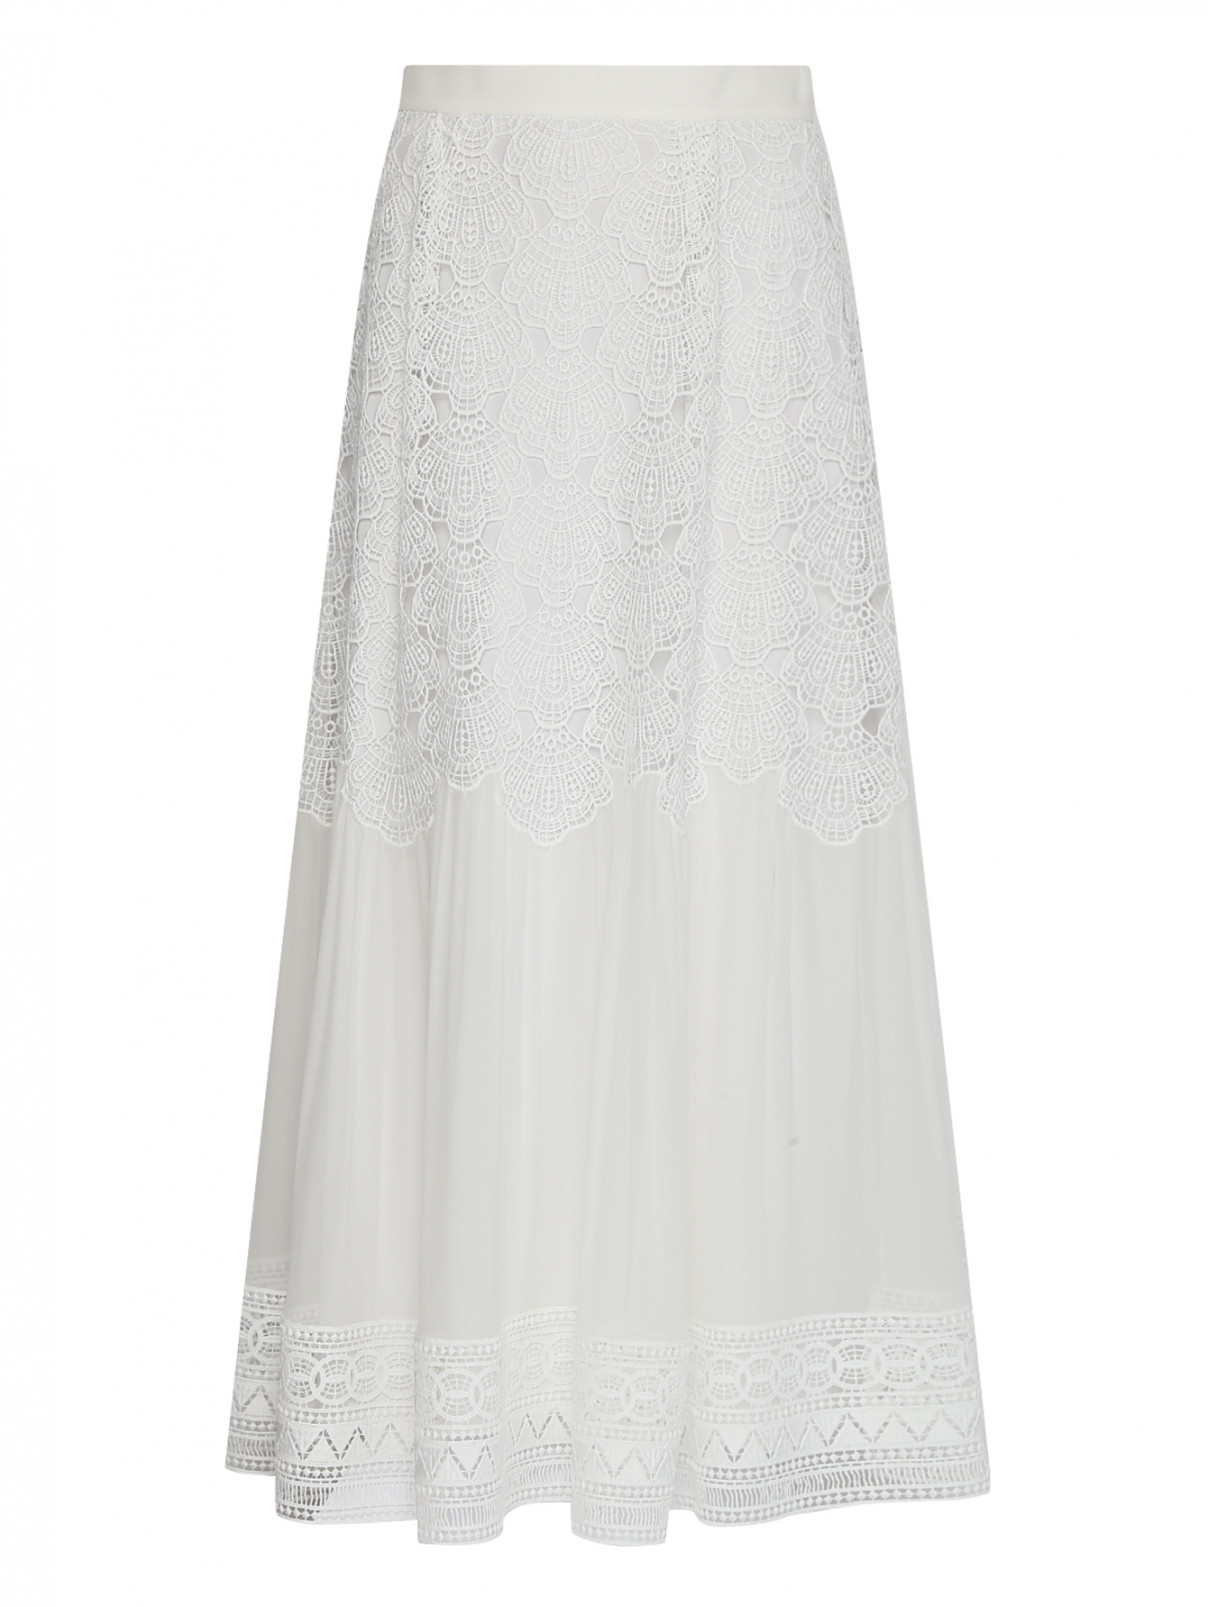 Юбка миди с вышивкой Alberta Ferretti  –  Общий вид  – Цвет:  Белый